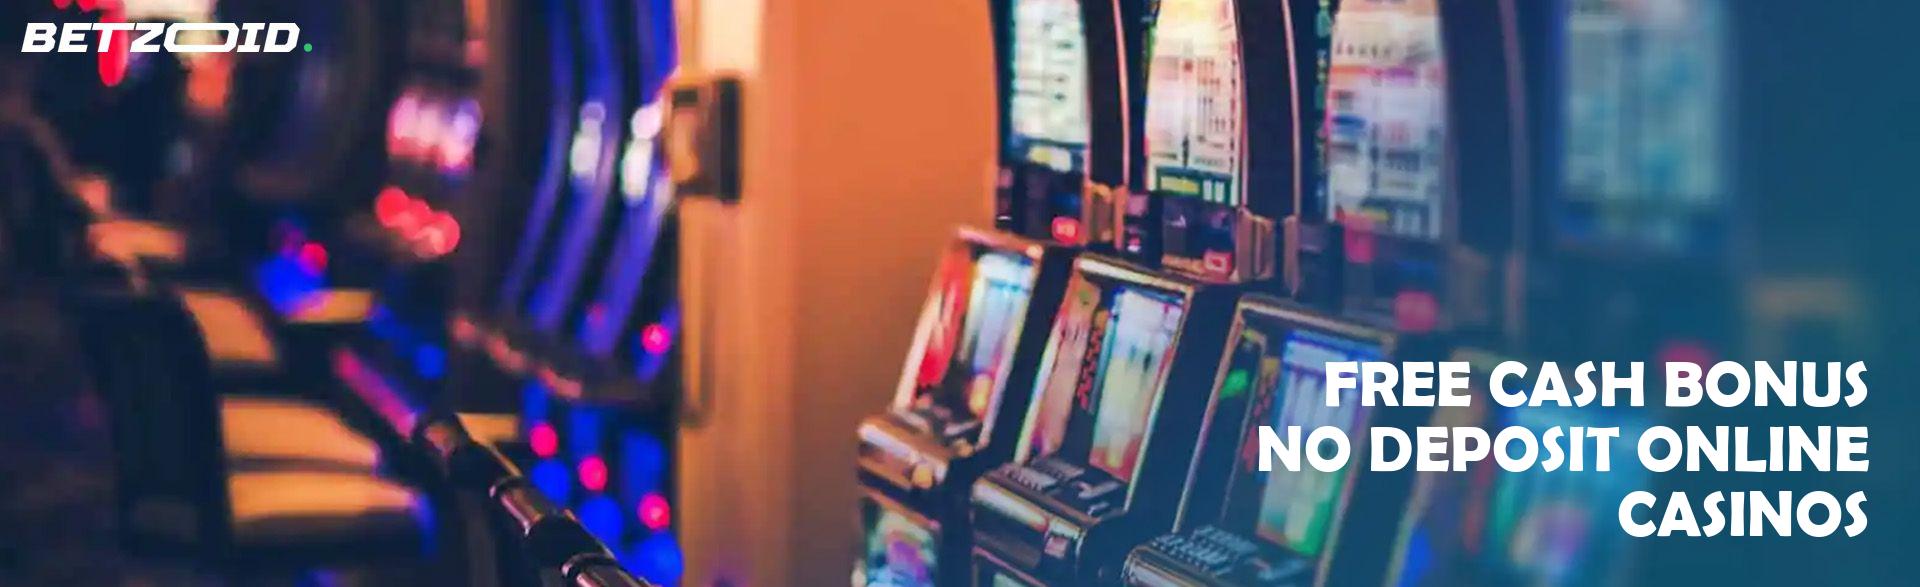 Free Cash Bonus No Deposit Online Casinos.